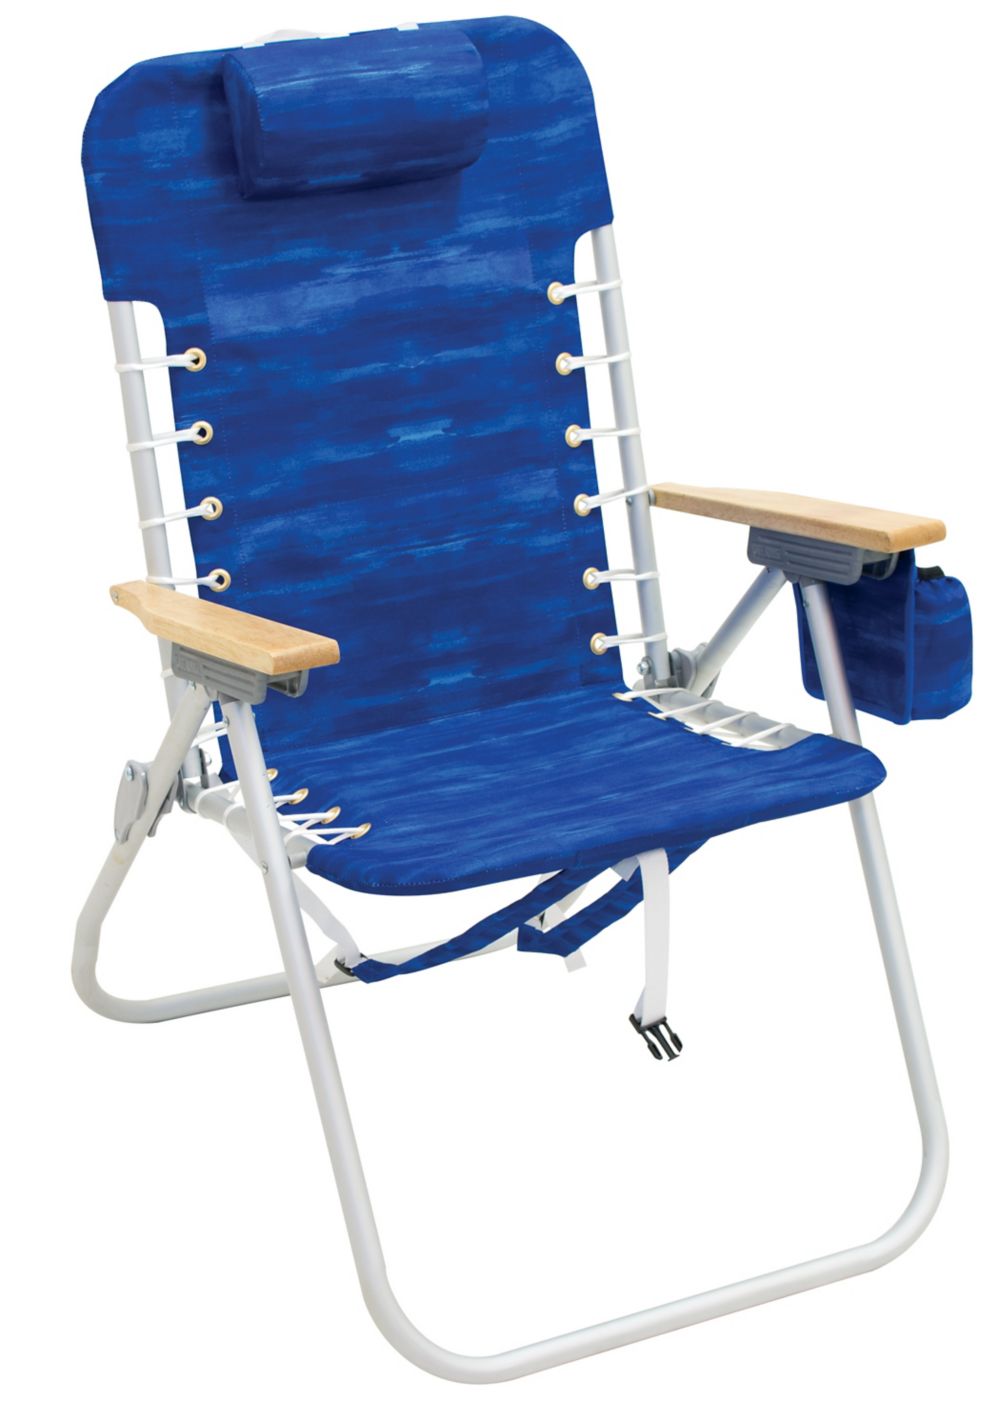 Unique Rio Brand Highboy Beach Chair for Simple Design